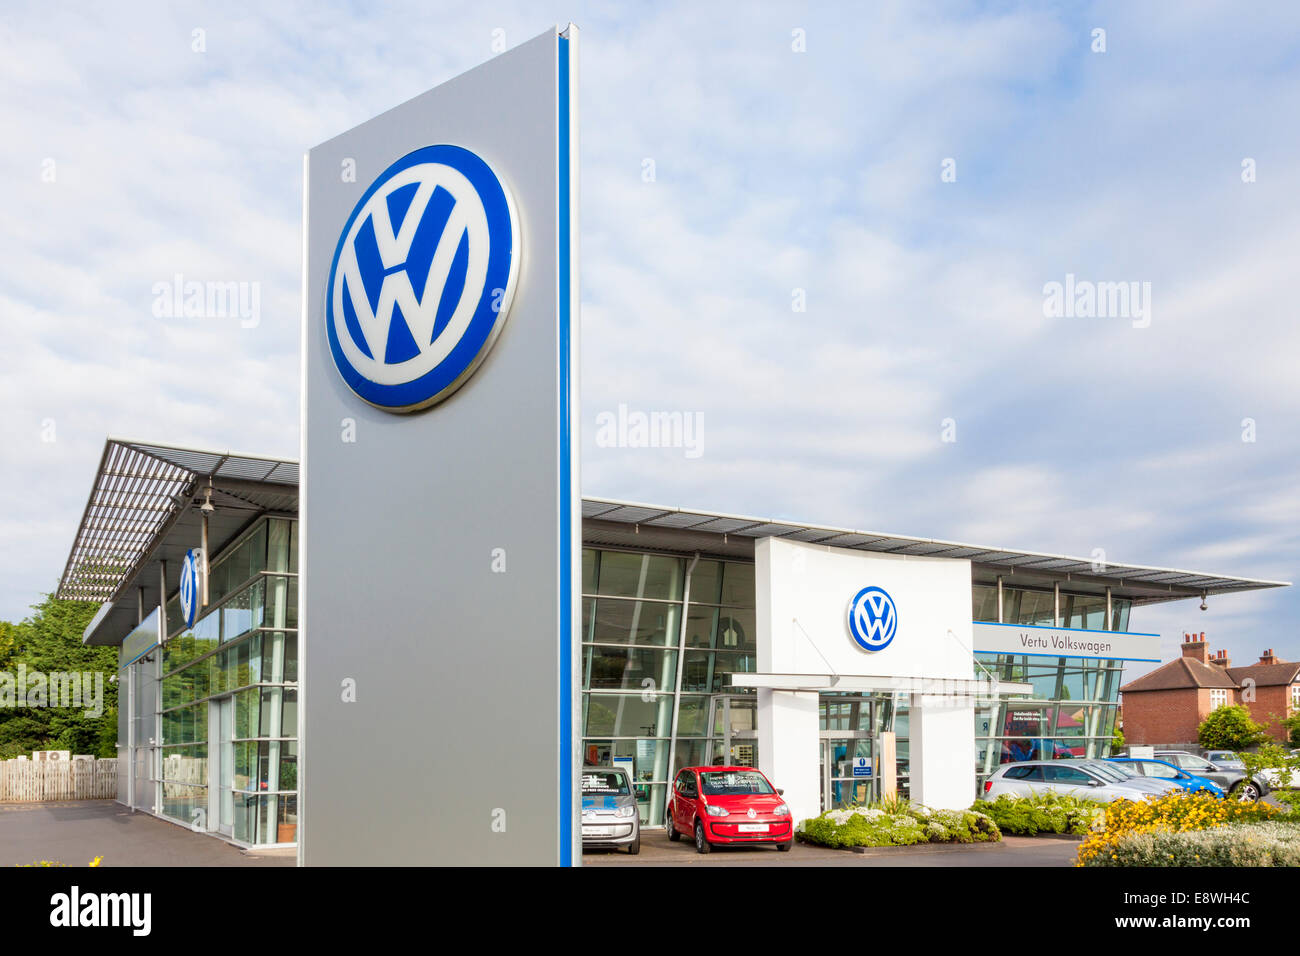 Vertu Volkswagen car showroom, West Bridgford, Nottinghamshire, England, UK Stock Photo